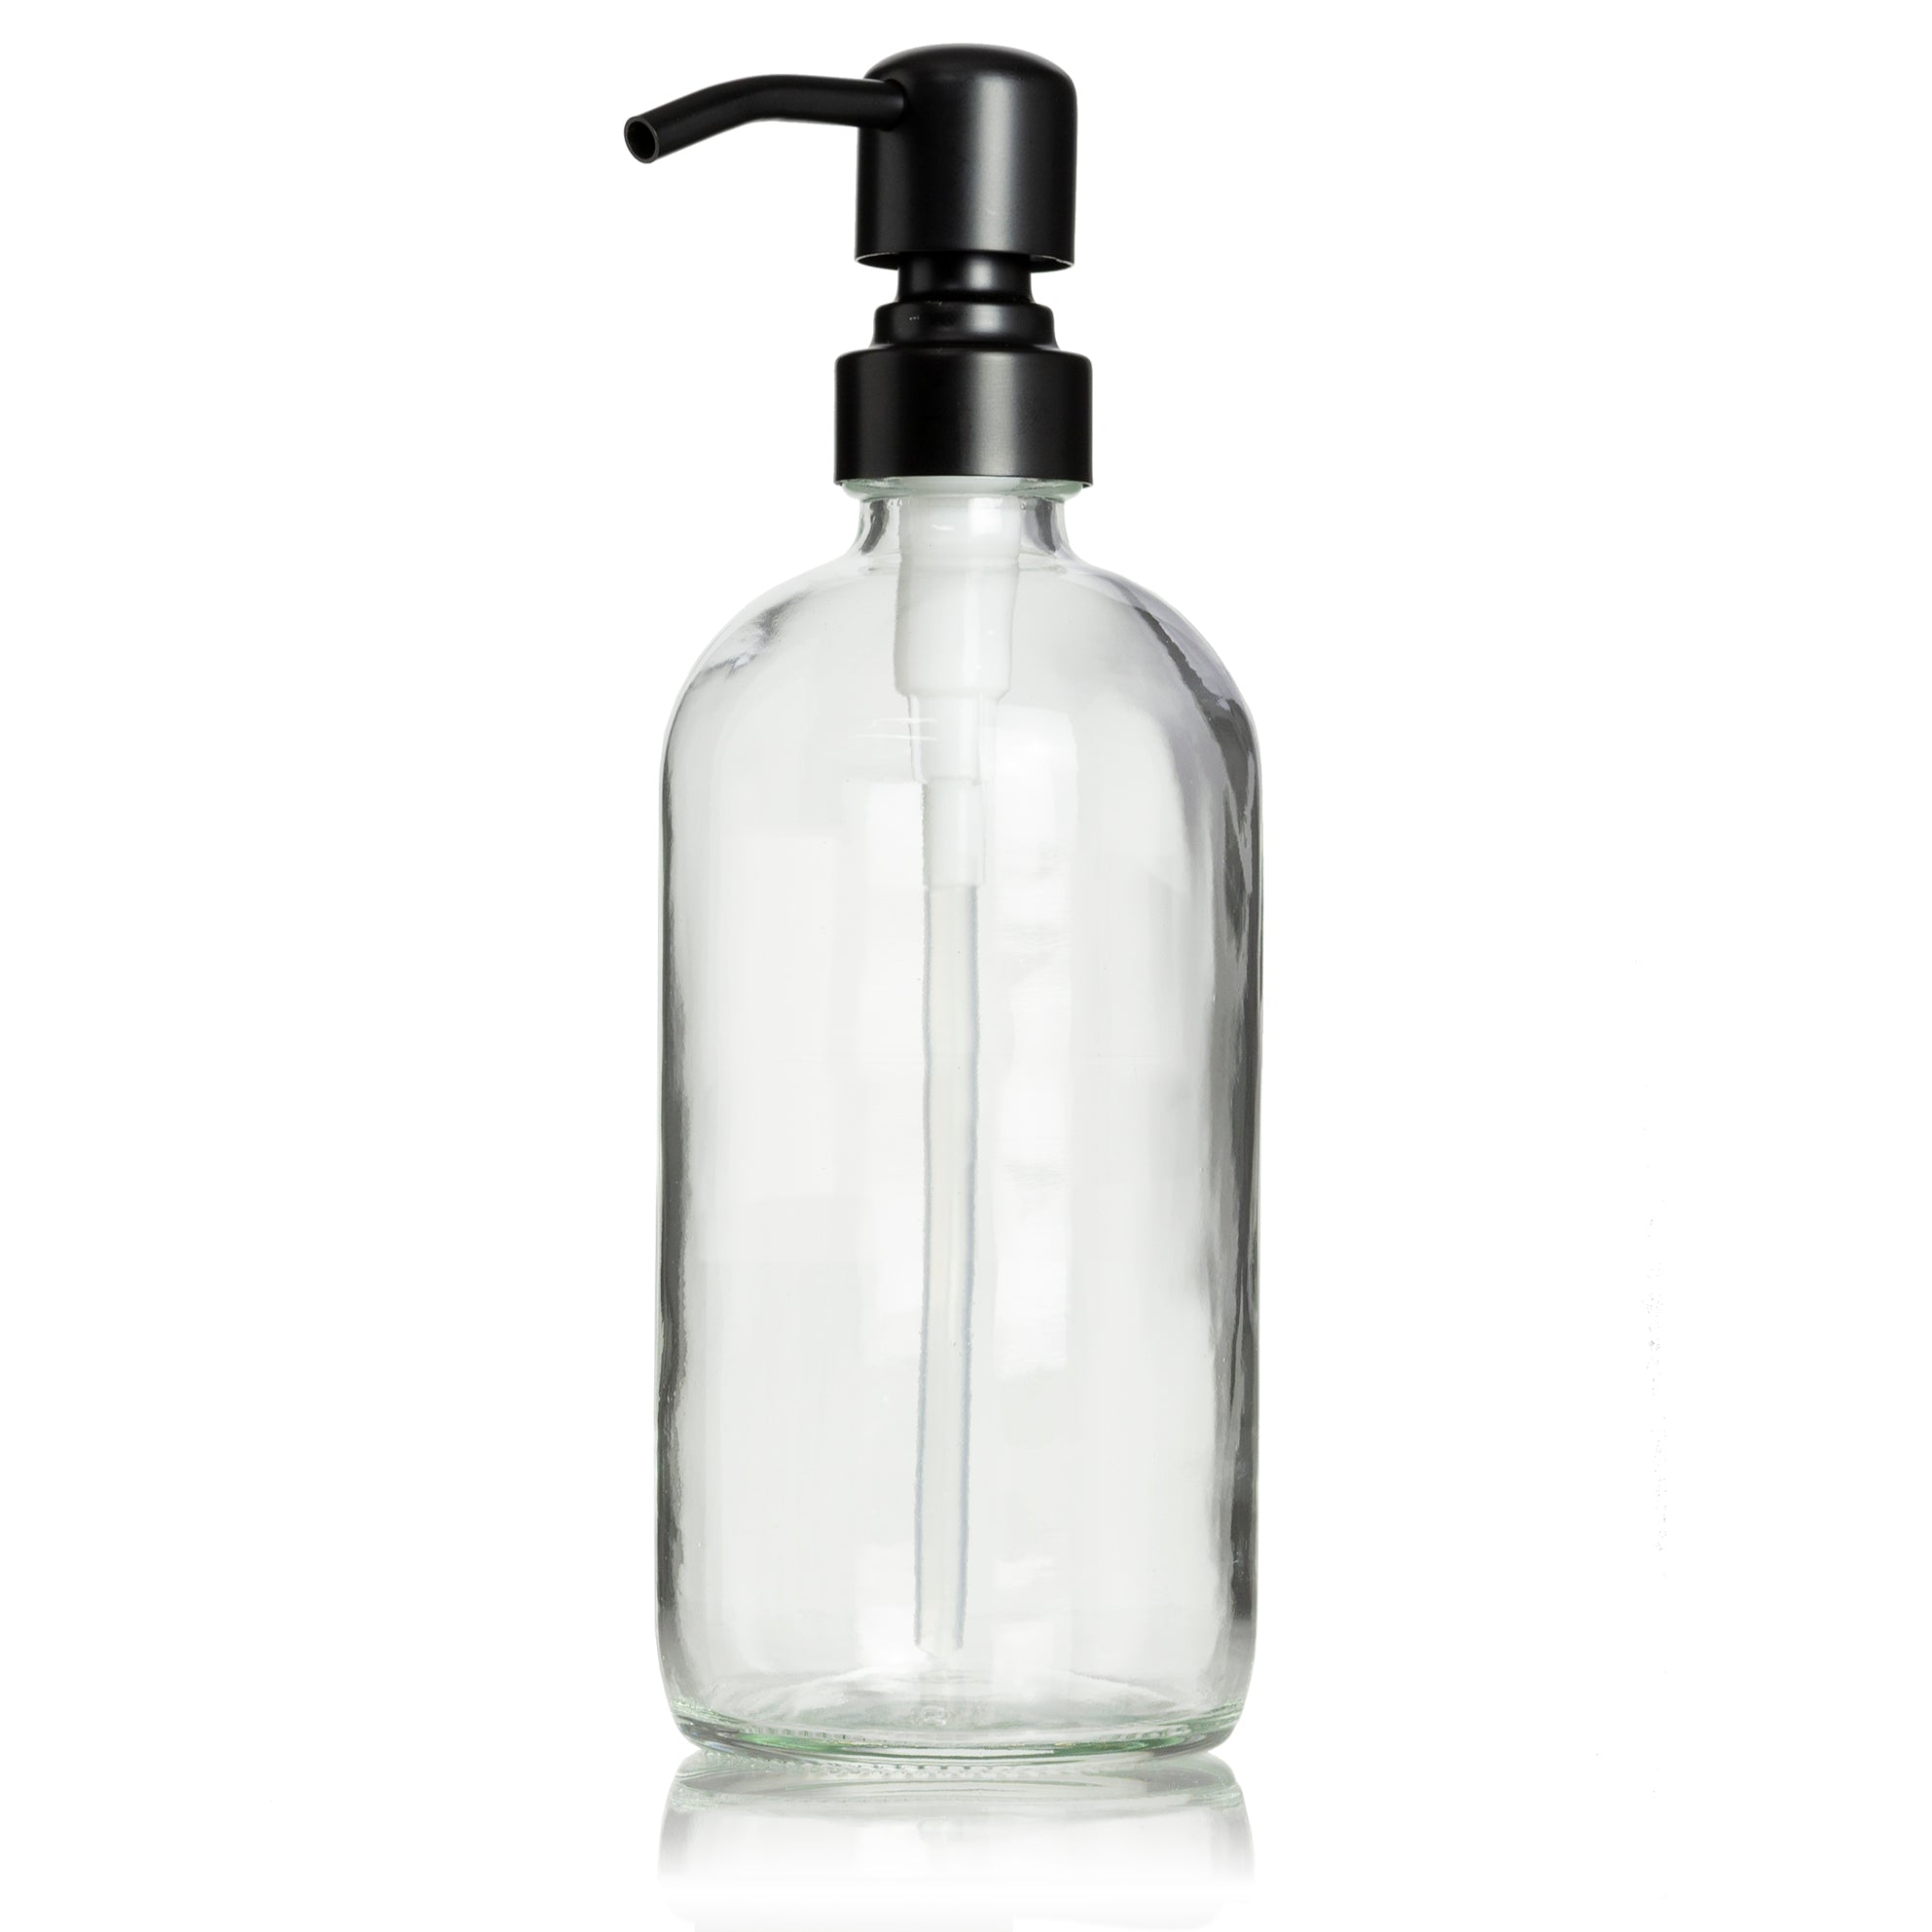 Clear Glass 16 oz Boston Round Soap Dispenser Pump Bottle